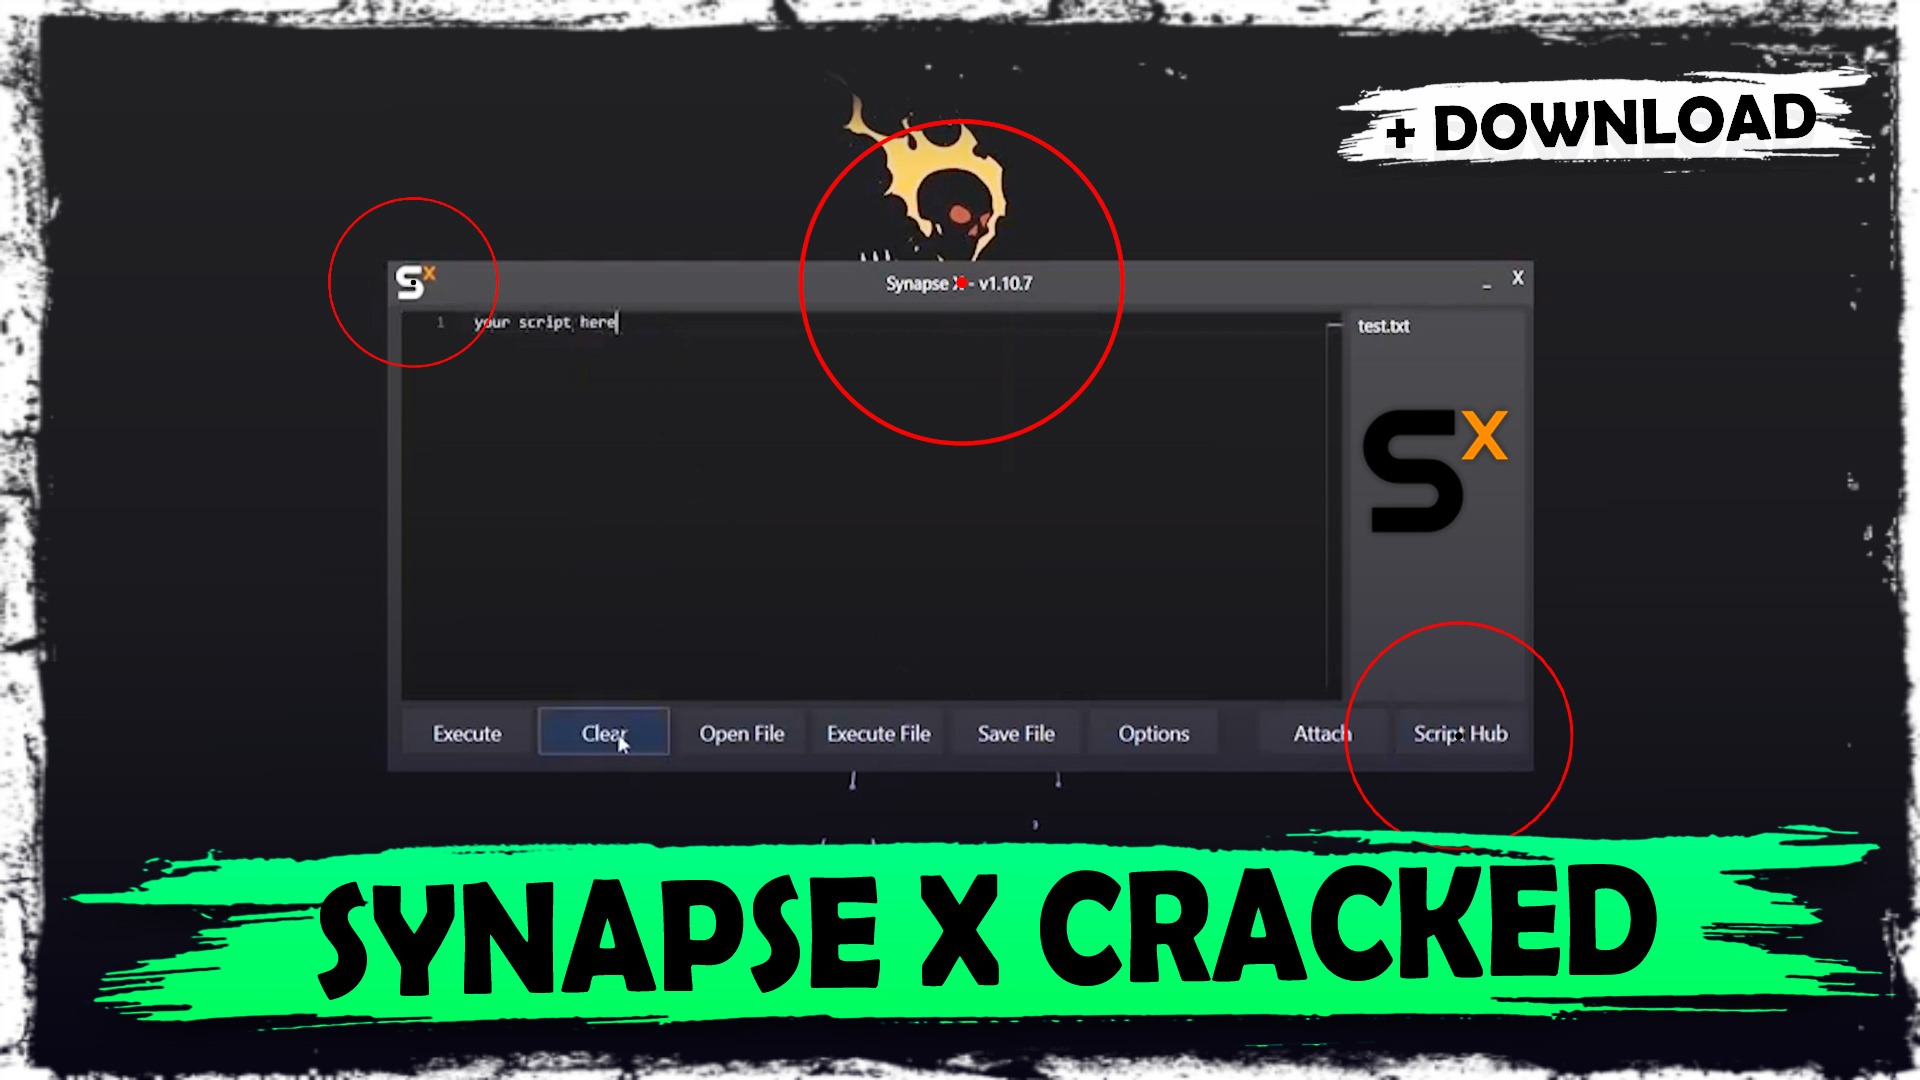 synapse-x-cracked-2020 — Teletype